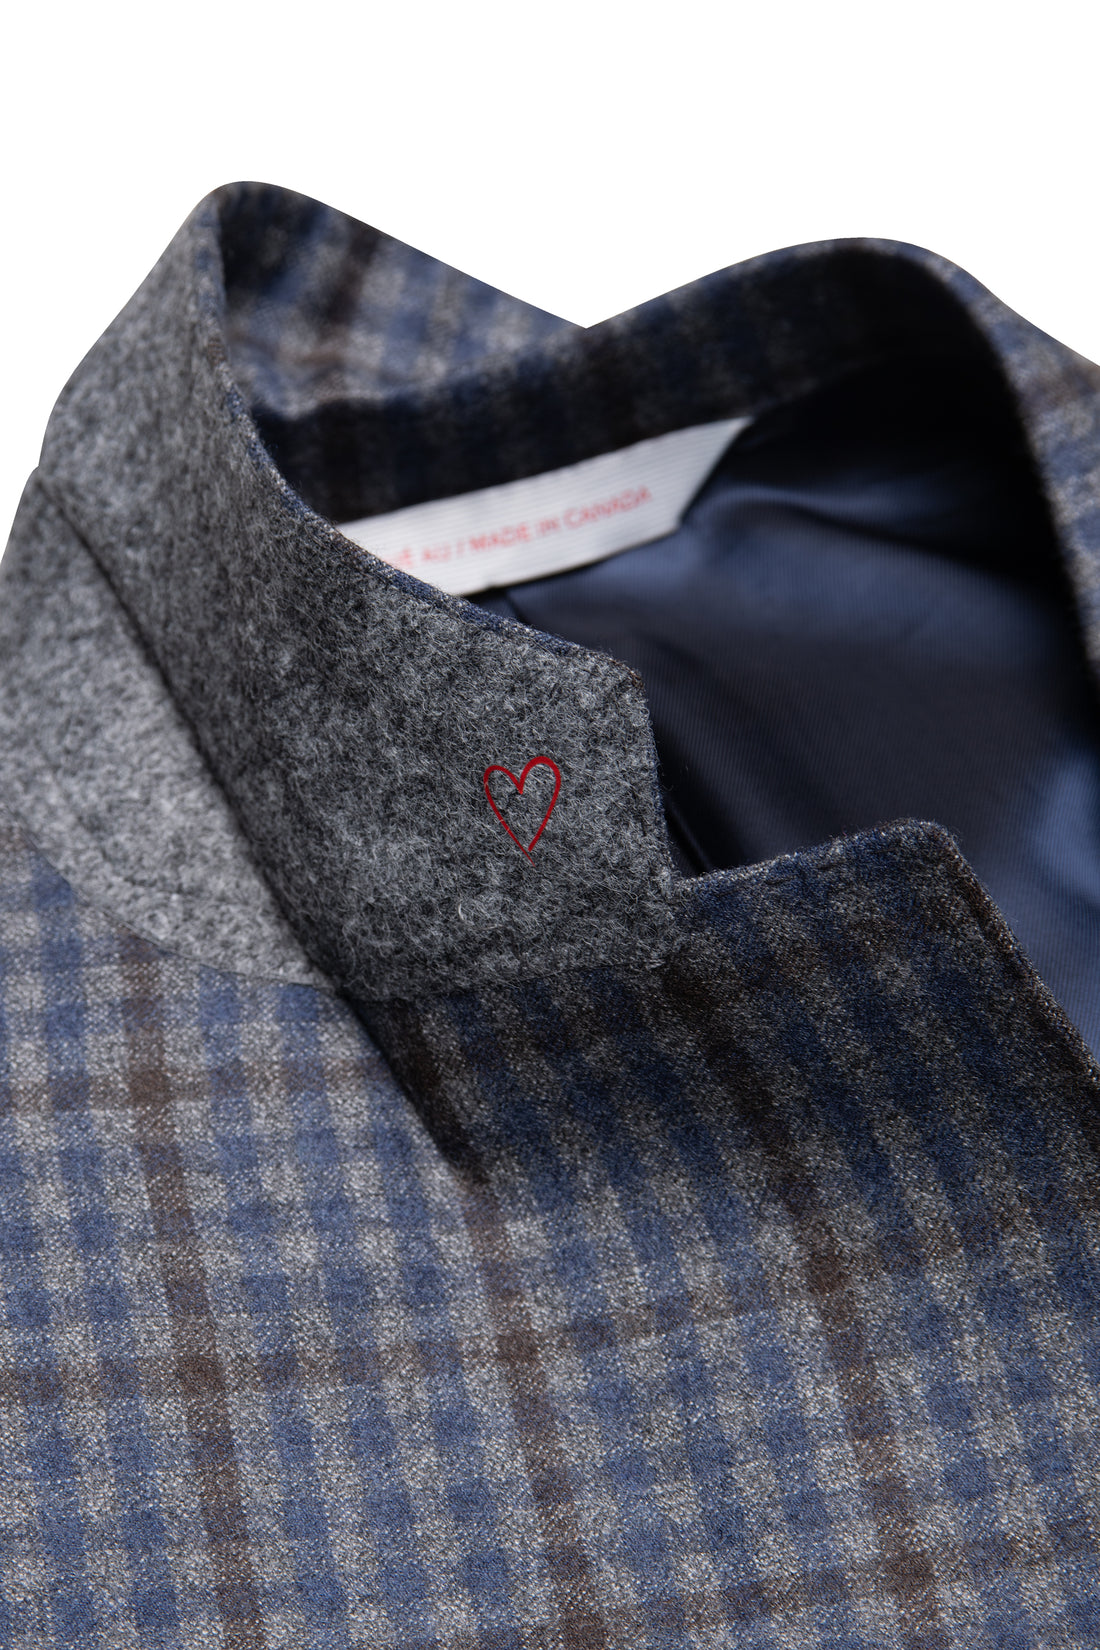 Grey Blue Microcheck Jacket  under collar heart detail